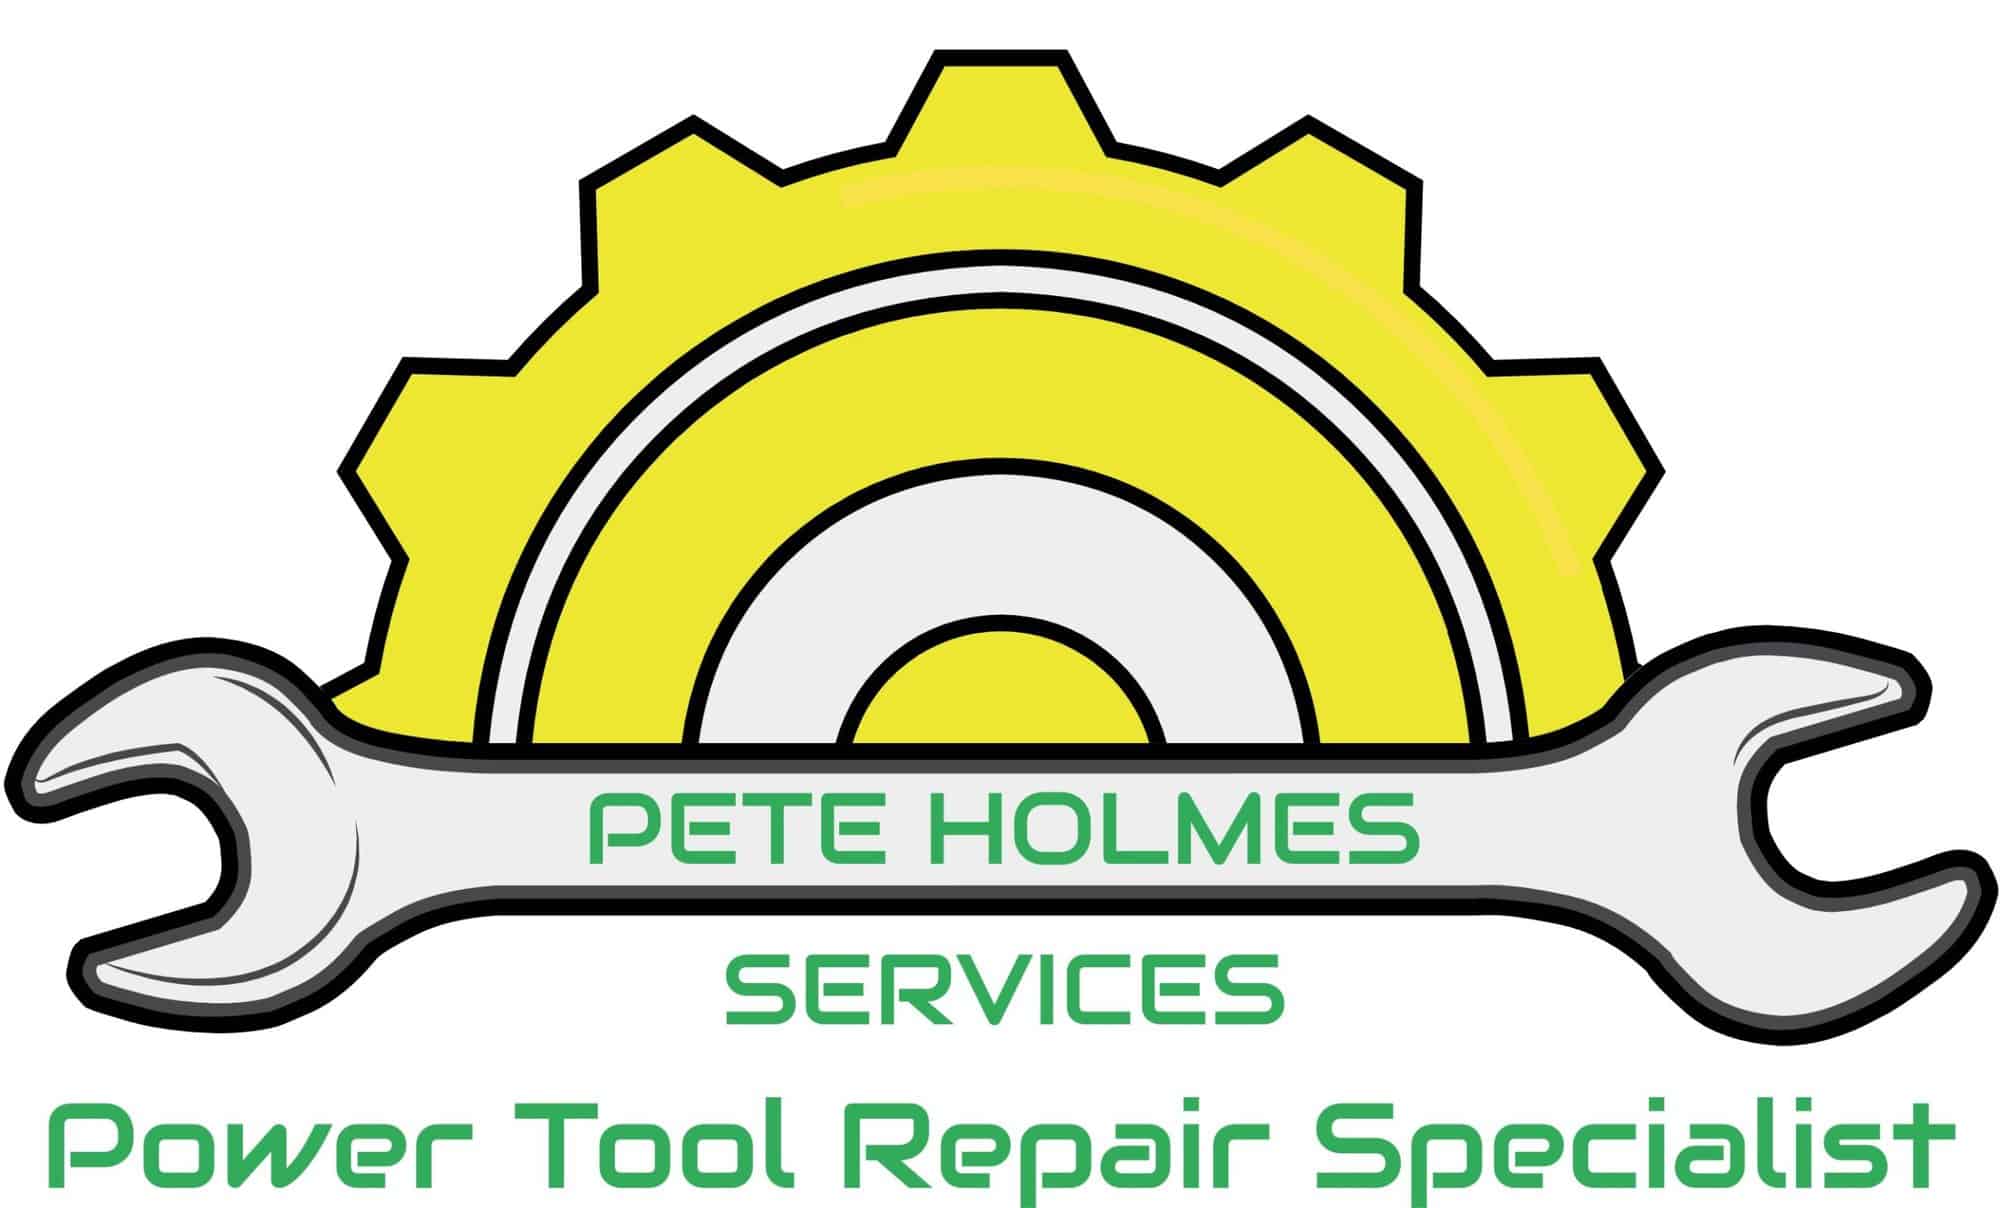 Pete Holmes Services